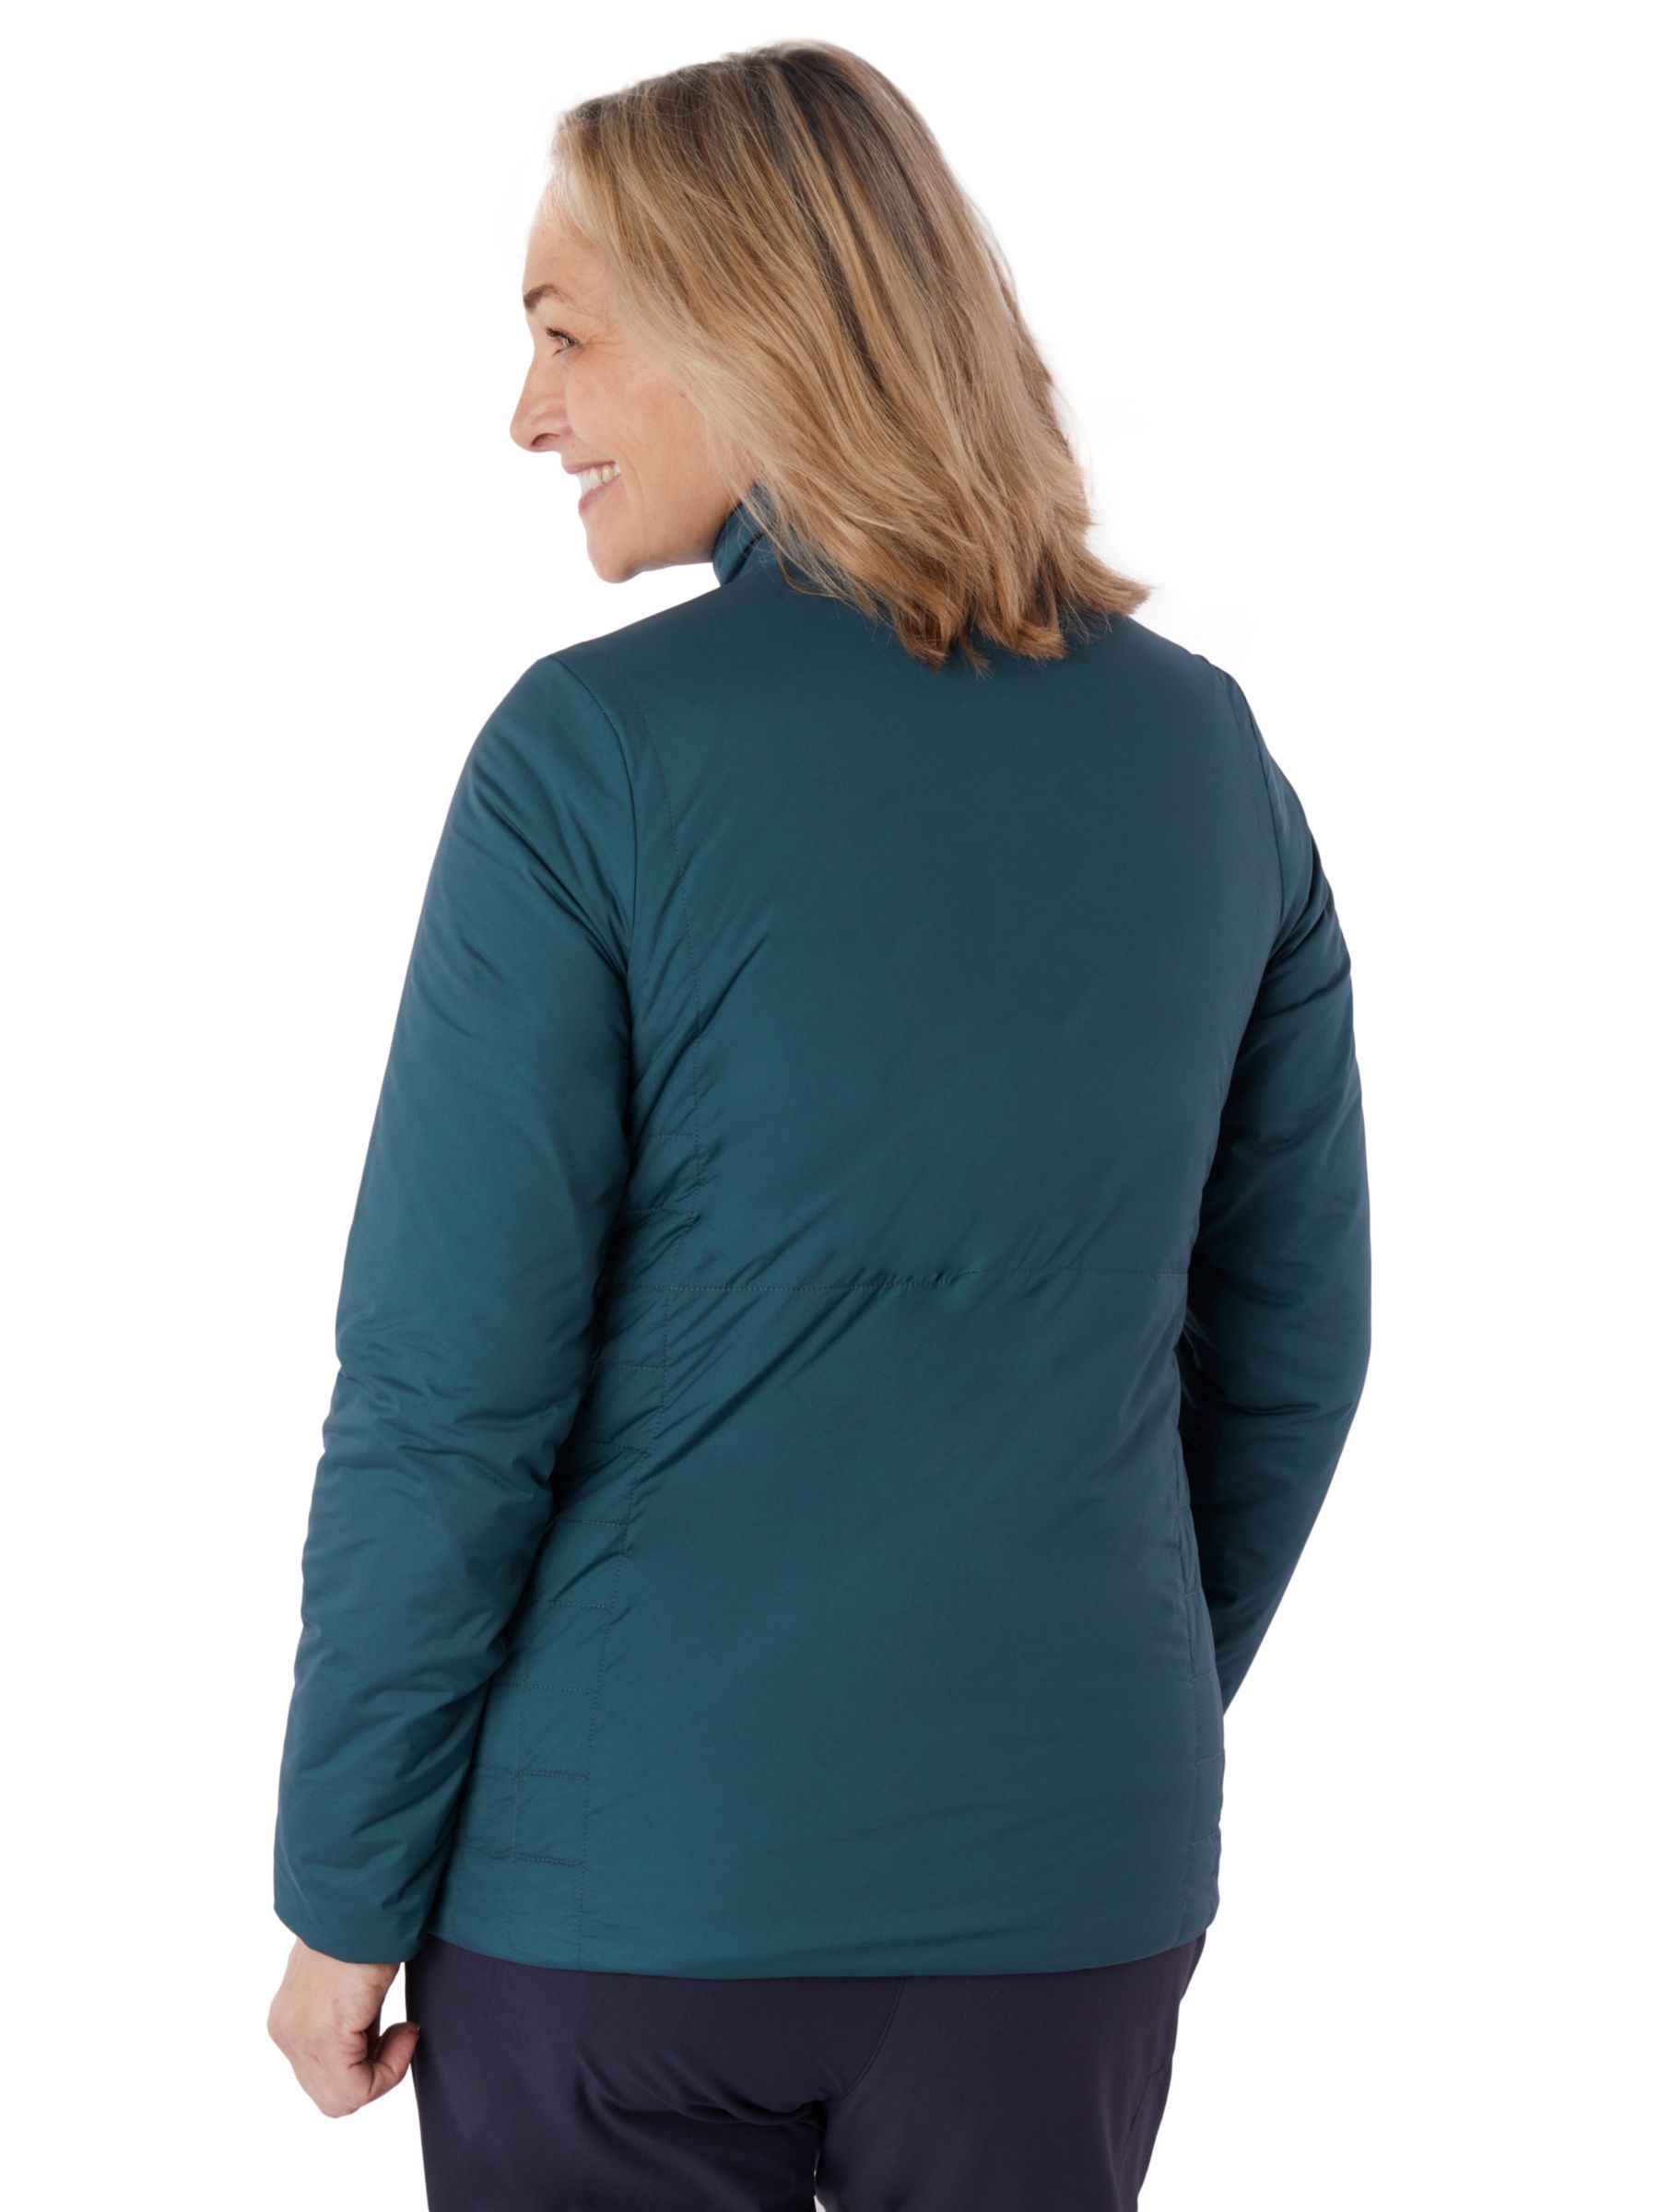 Buy Rohan Rime Women's Lightweight Insulated Jacket Online at johnlewis.com